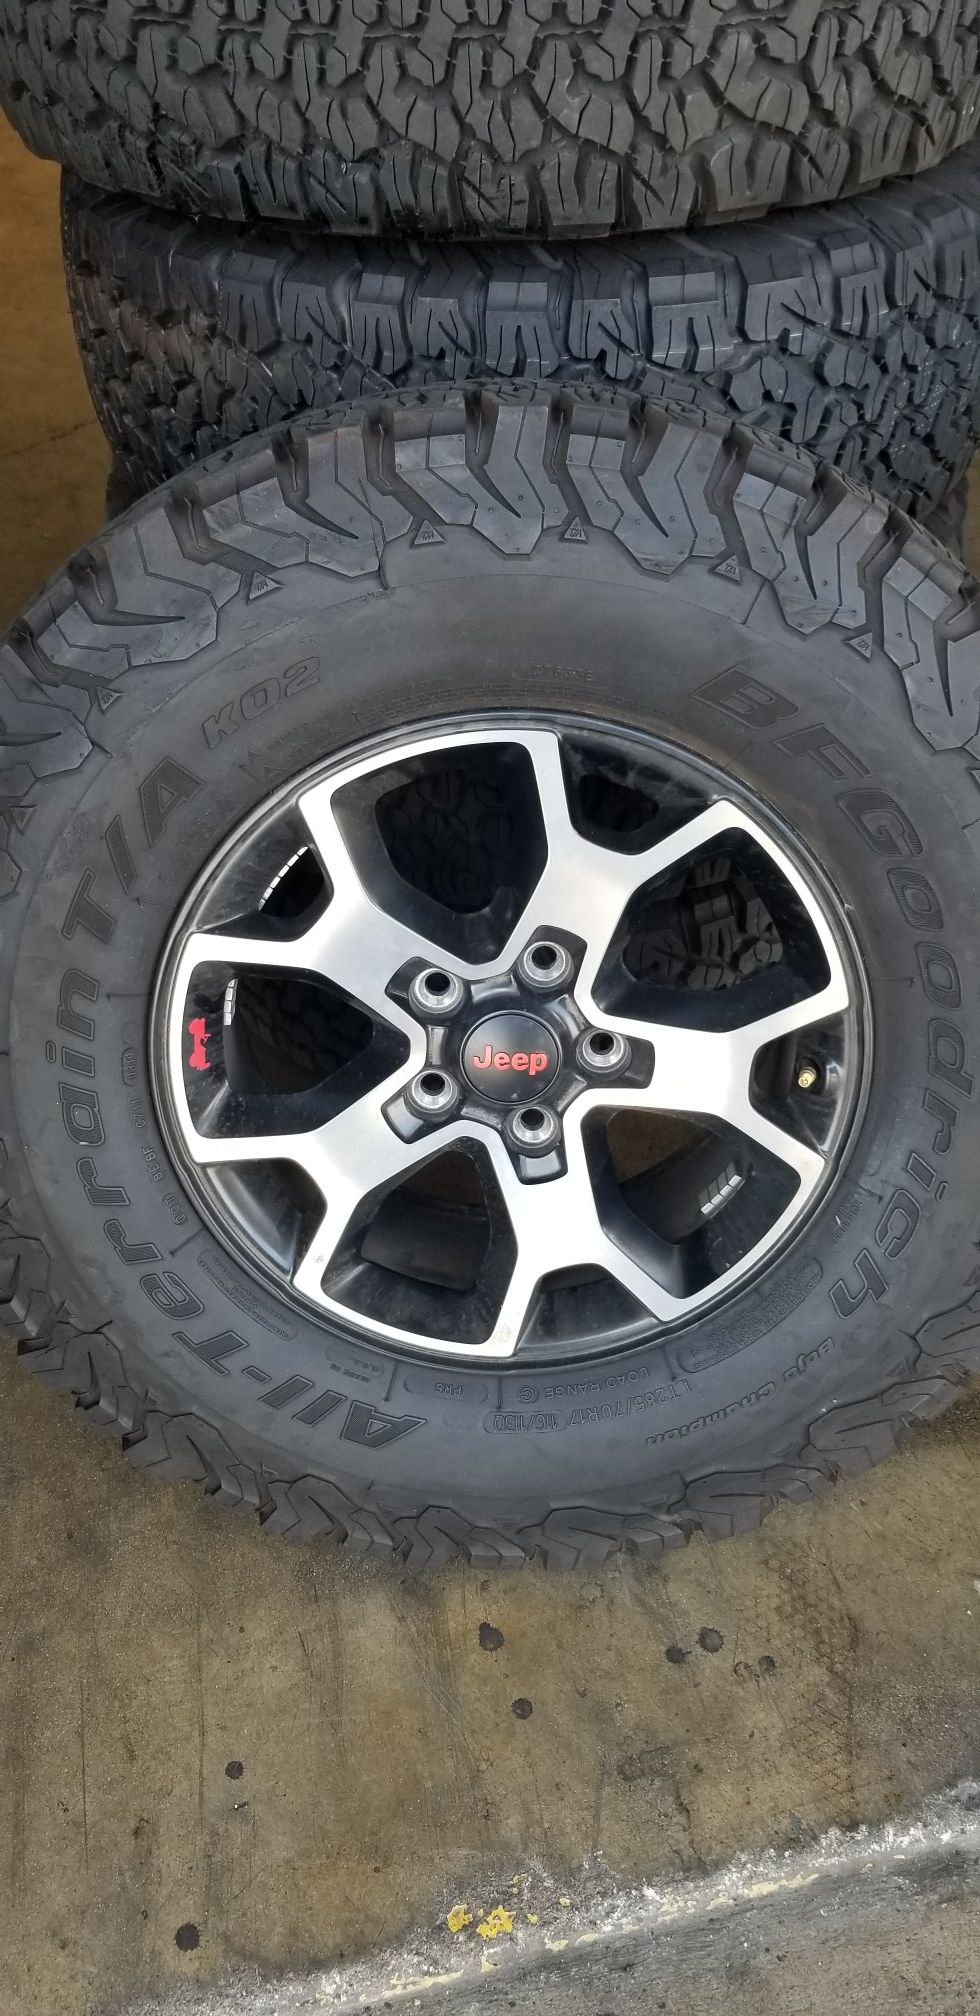 Jeep Wrangler Rubicon rims and tires